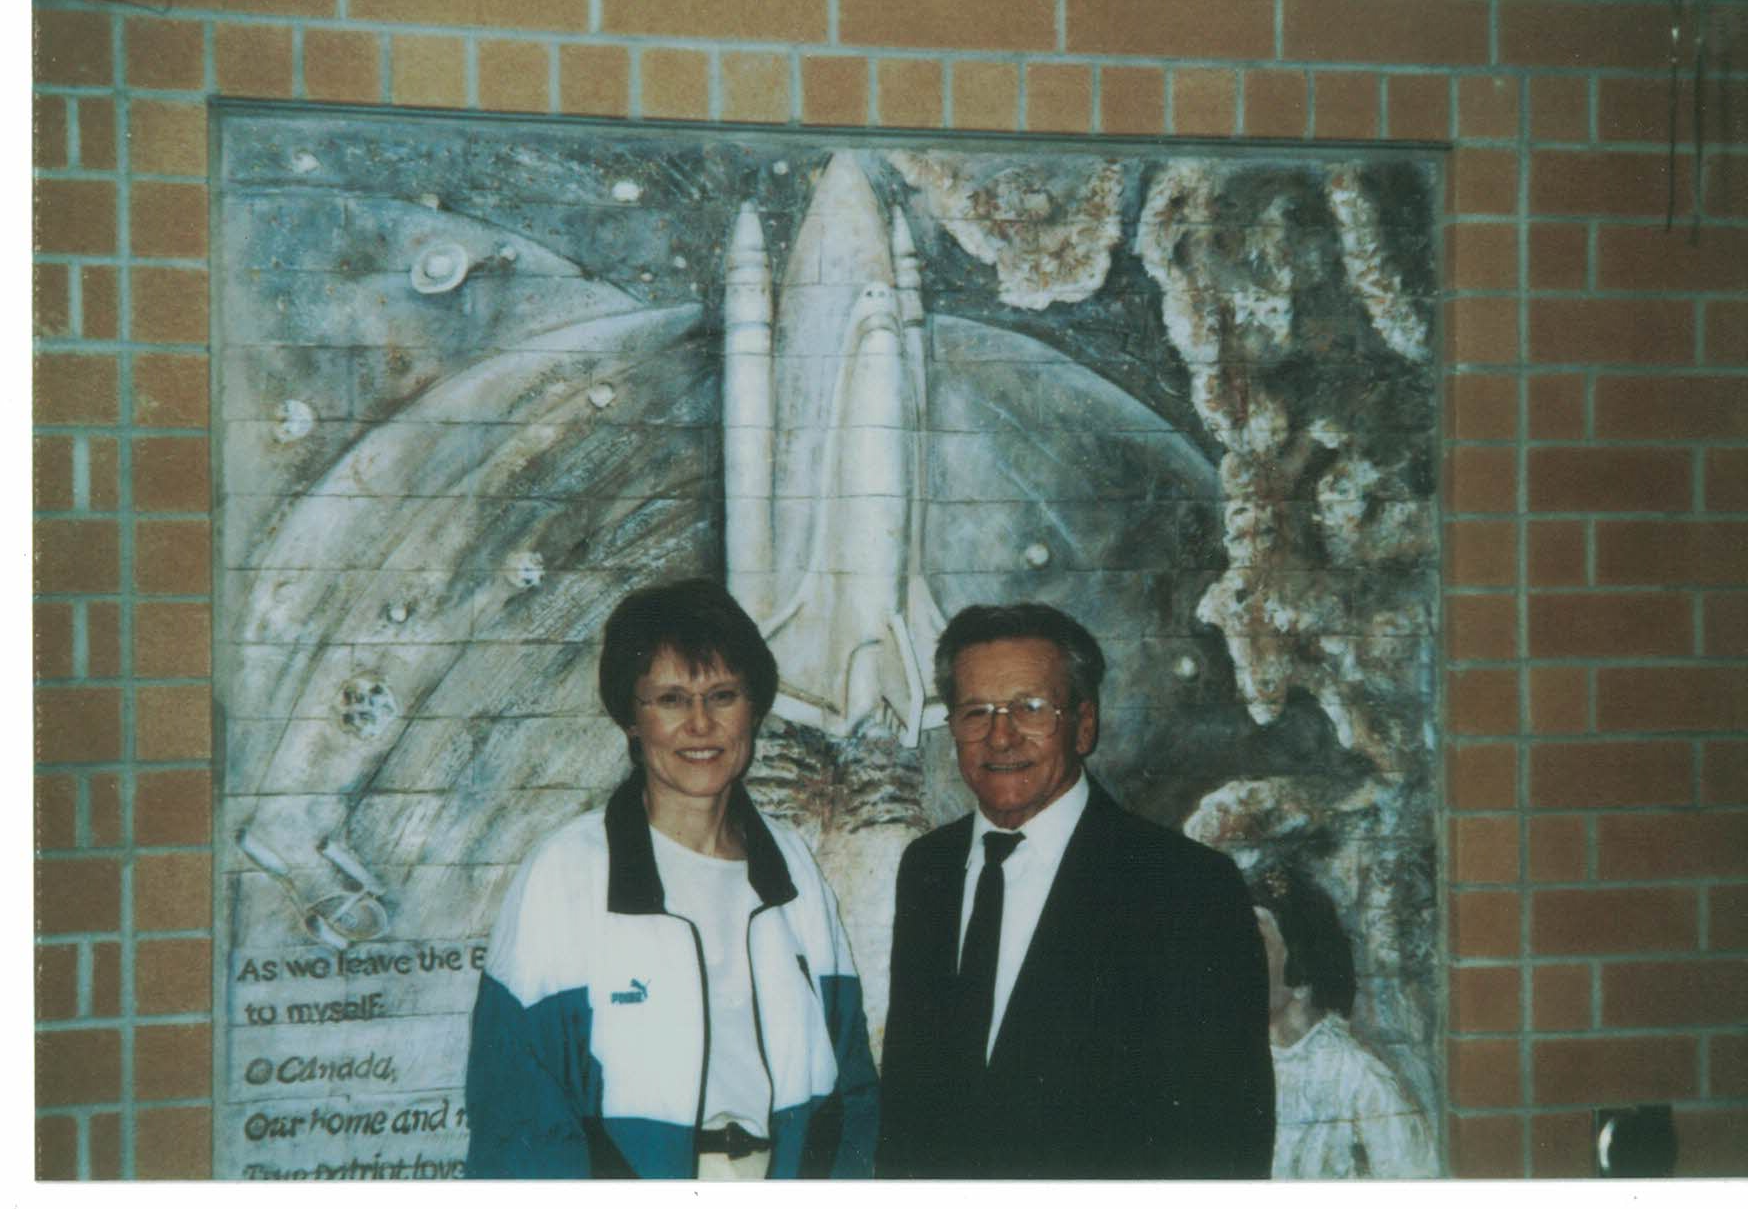 Belluz and astronaut Roberta Bondar